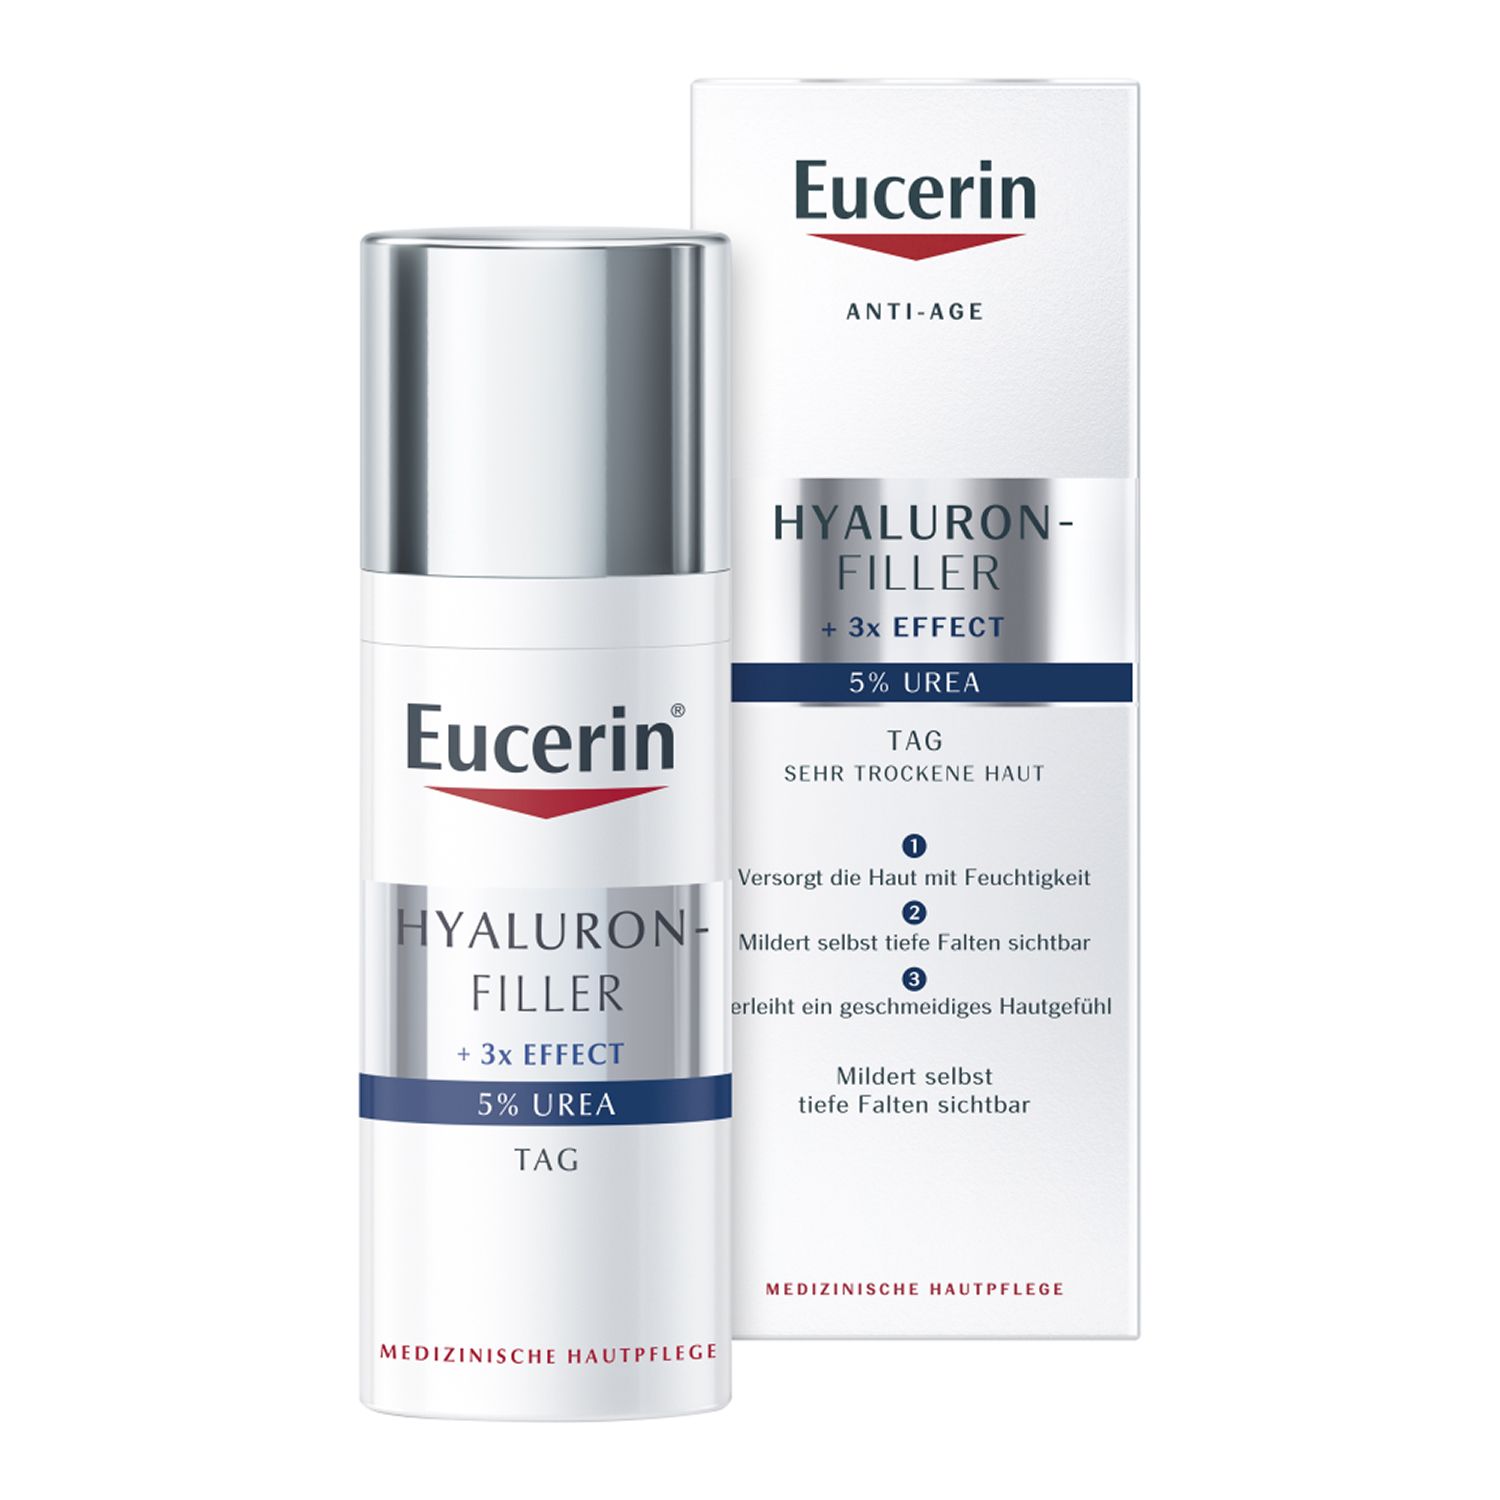 Eucerin® Hyaluron-Filler 5% Urea Tagescreme